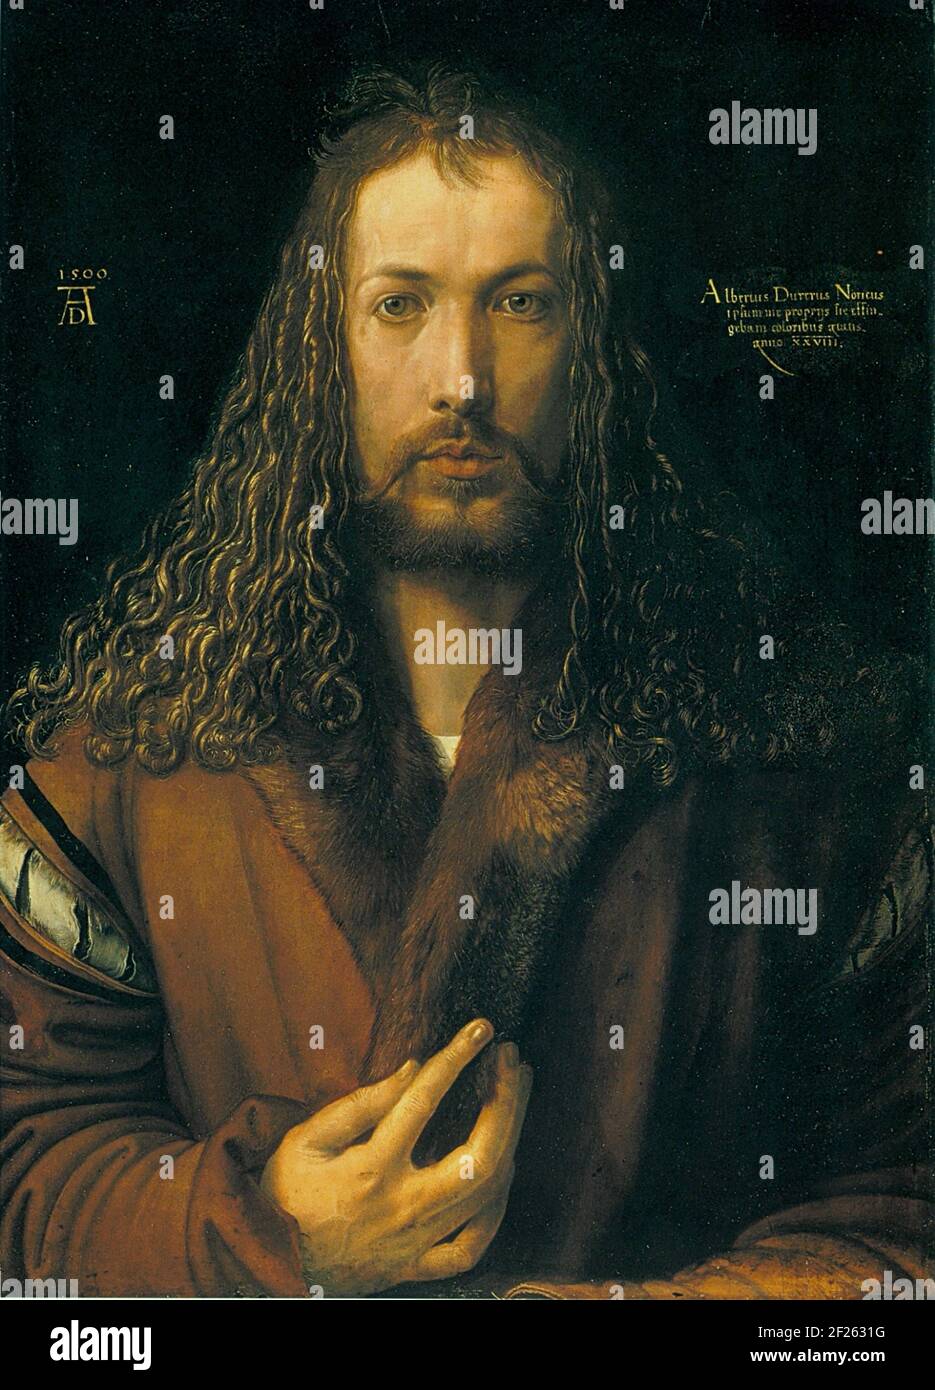 Albrecht Dürer - Autoritratto - 1500 Foto Stock